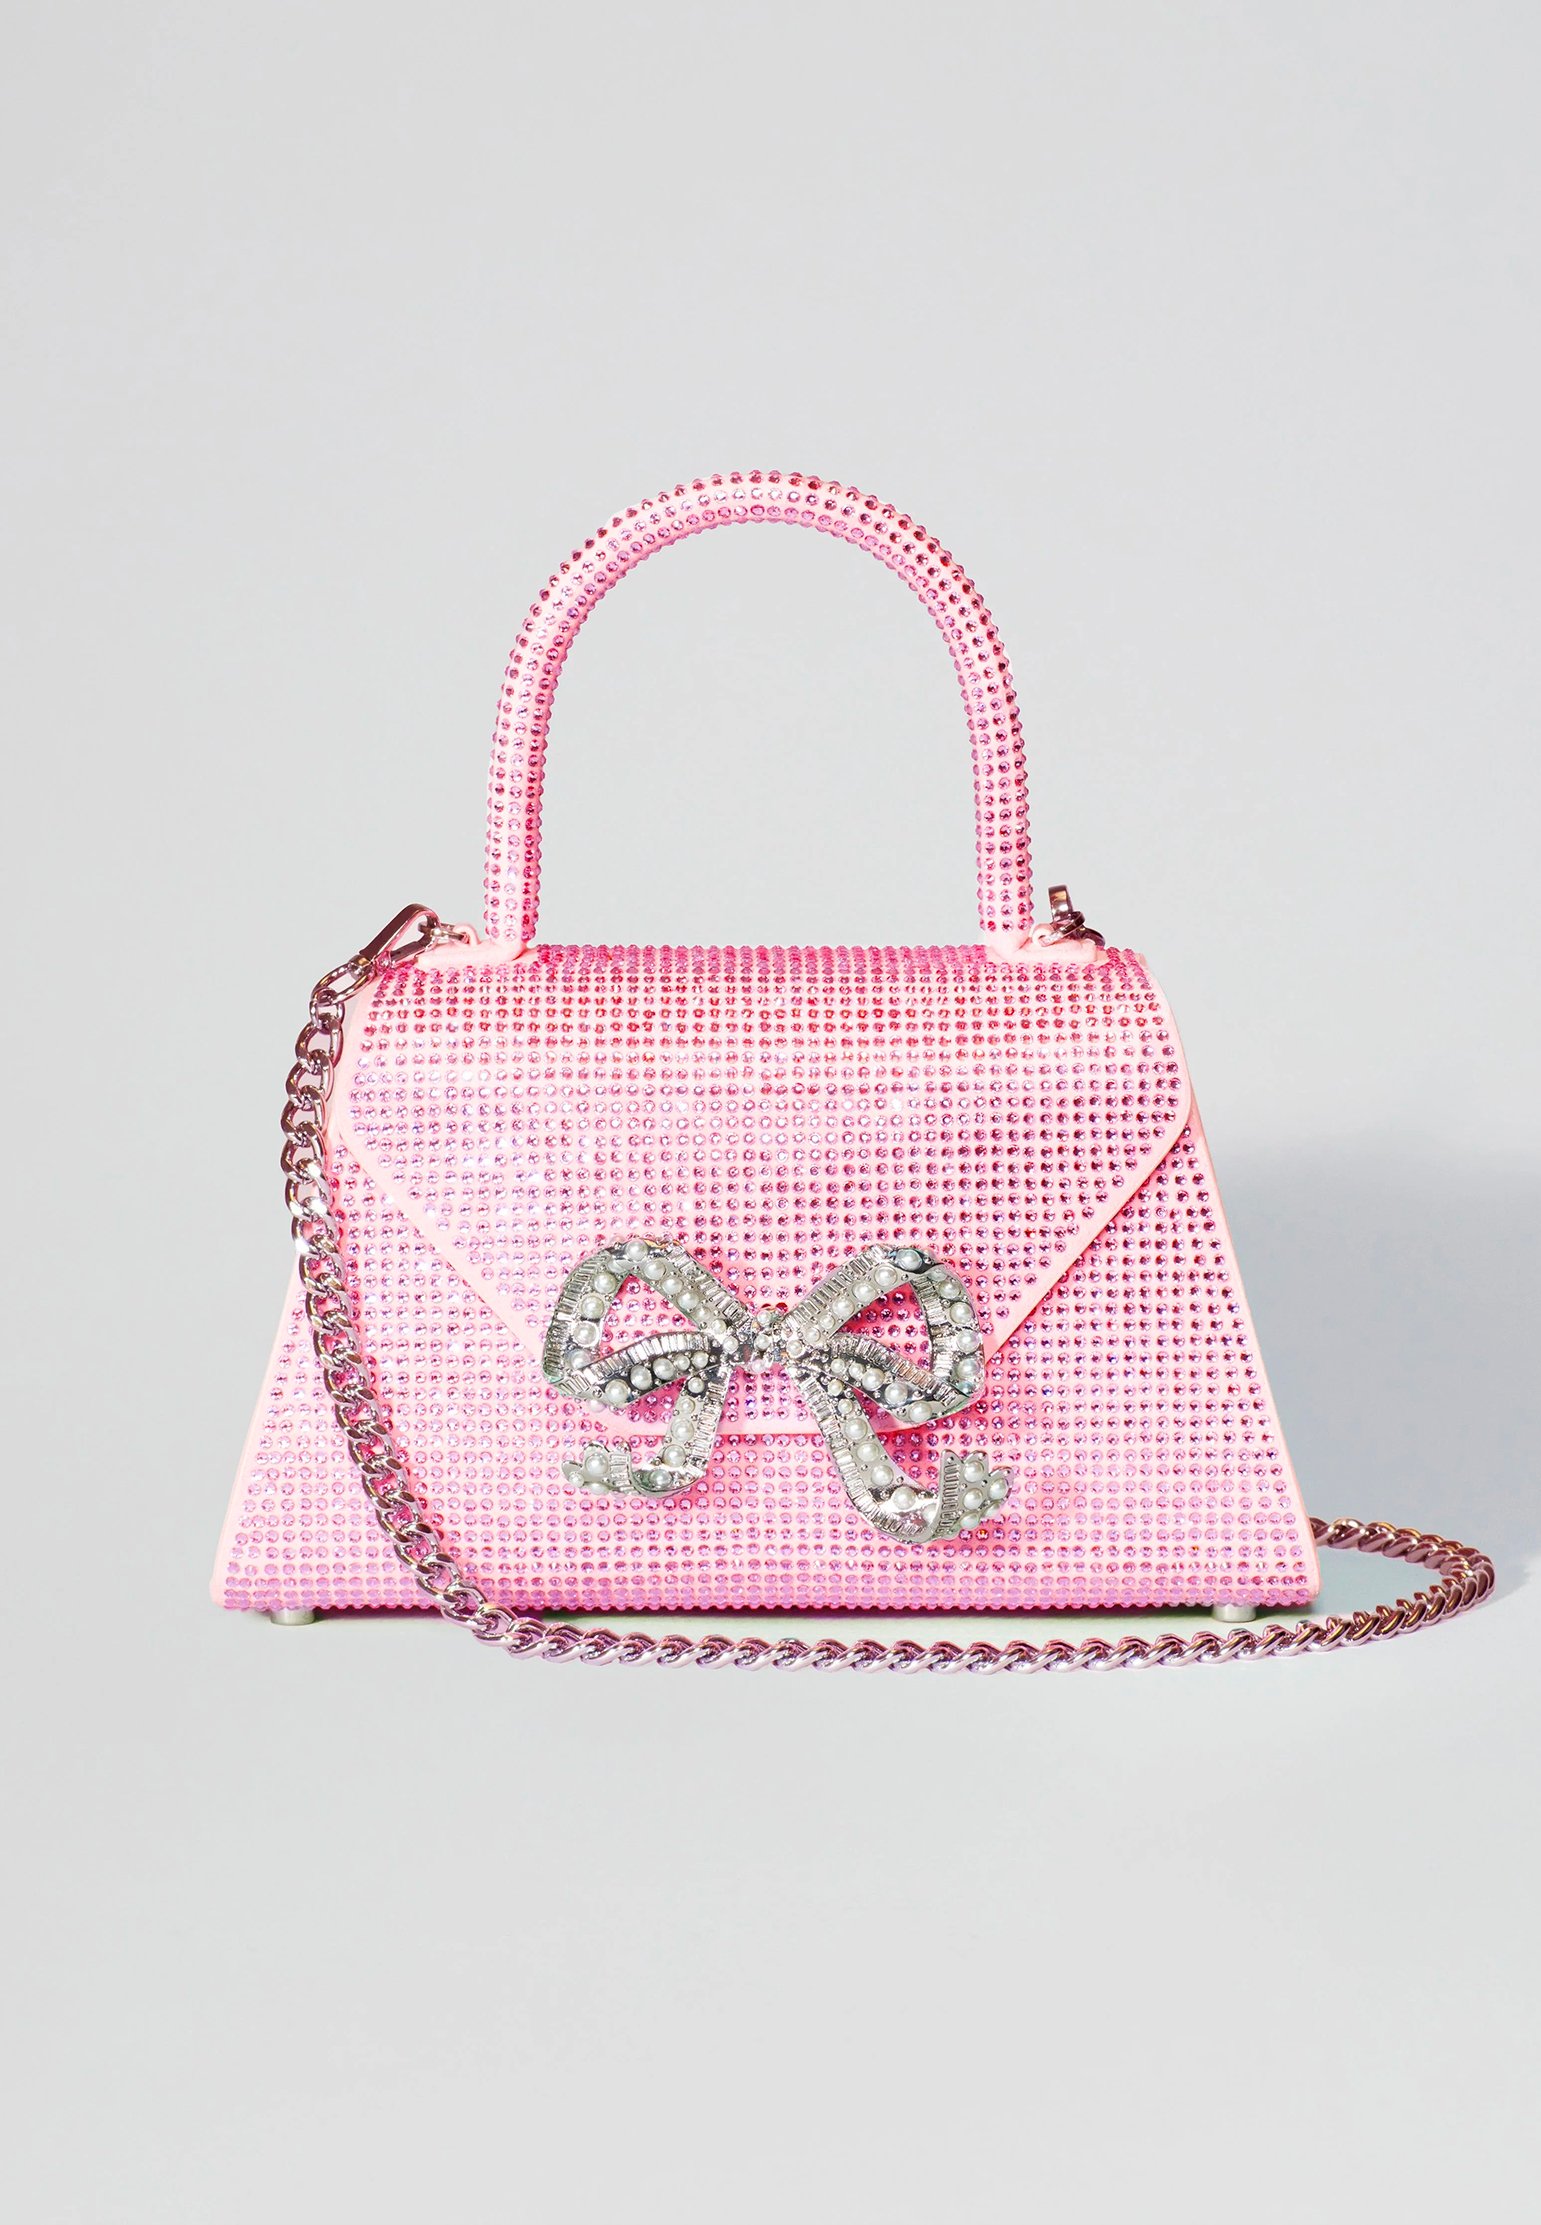 Bag SELF-PORTRAIT Color: pink (Code: 1784) in online store Allure